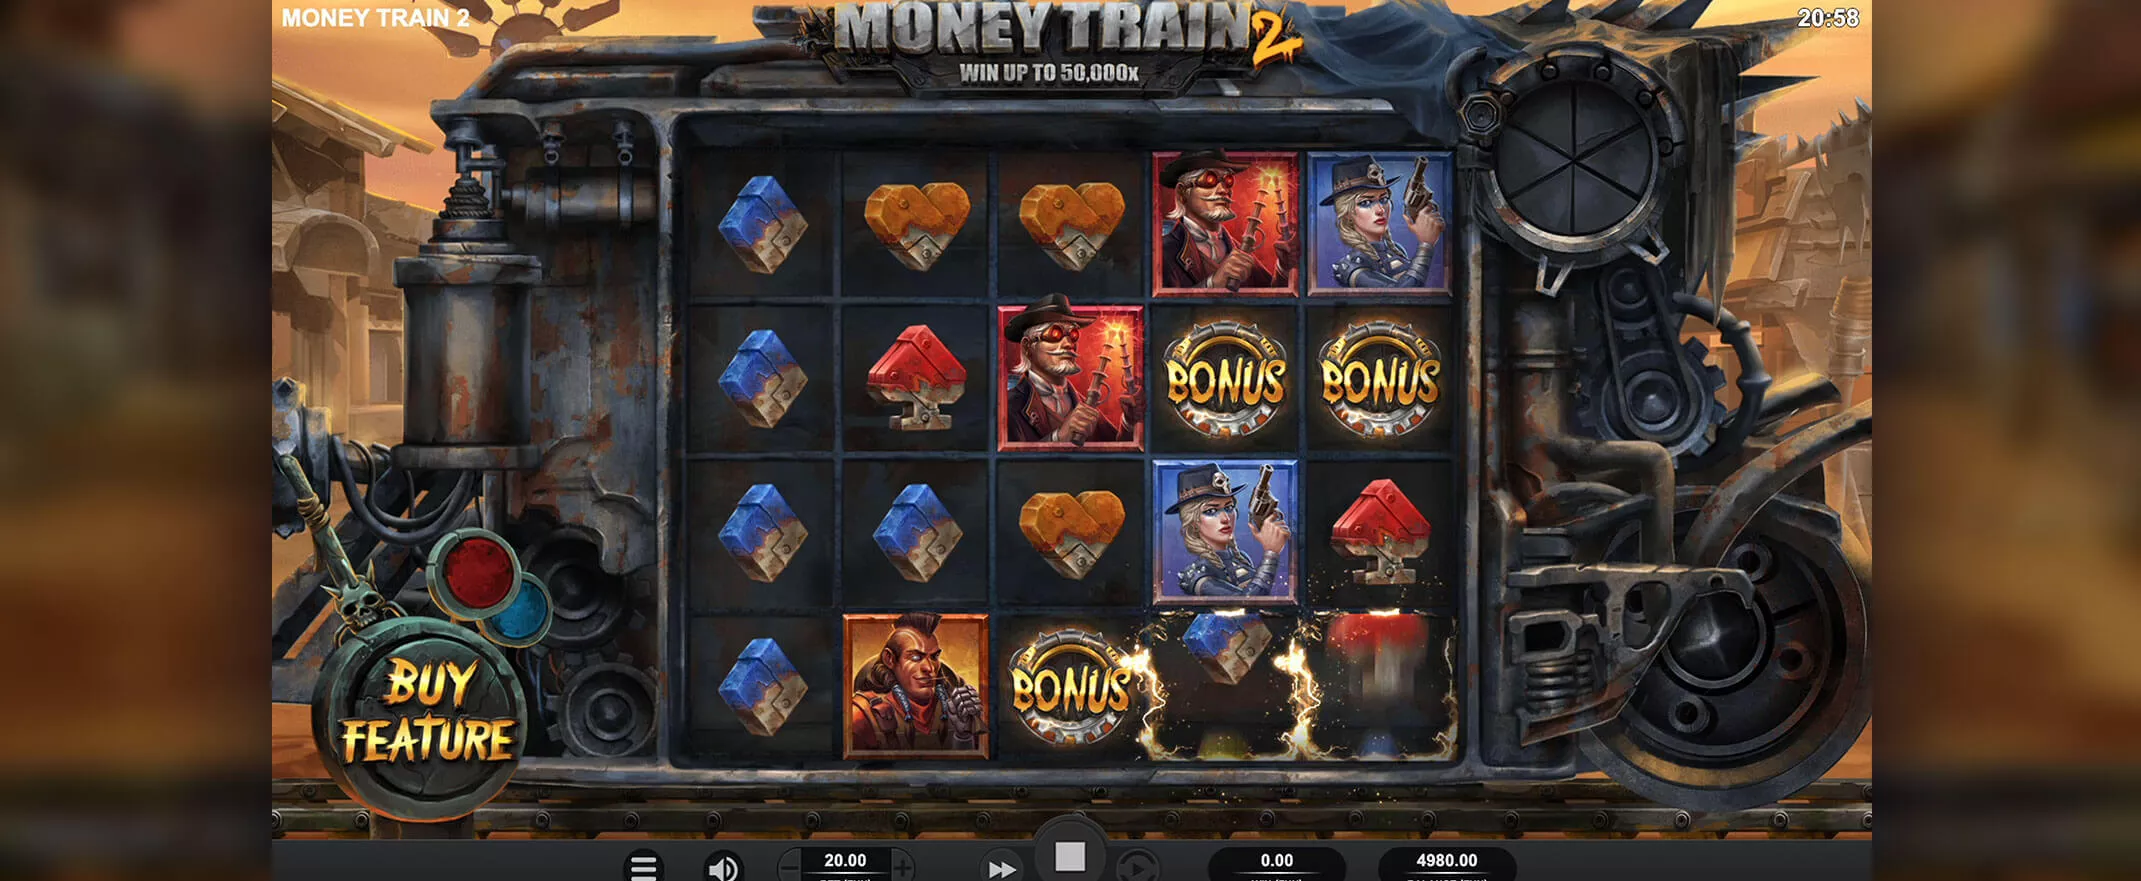 Money Train 2 slot screenshot of the reels